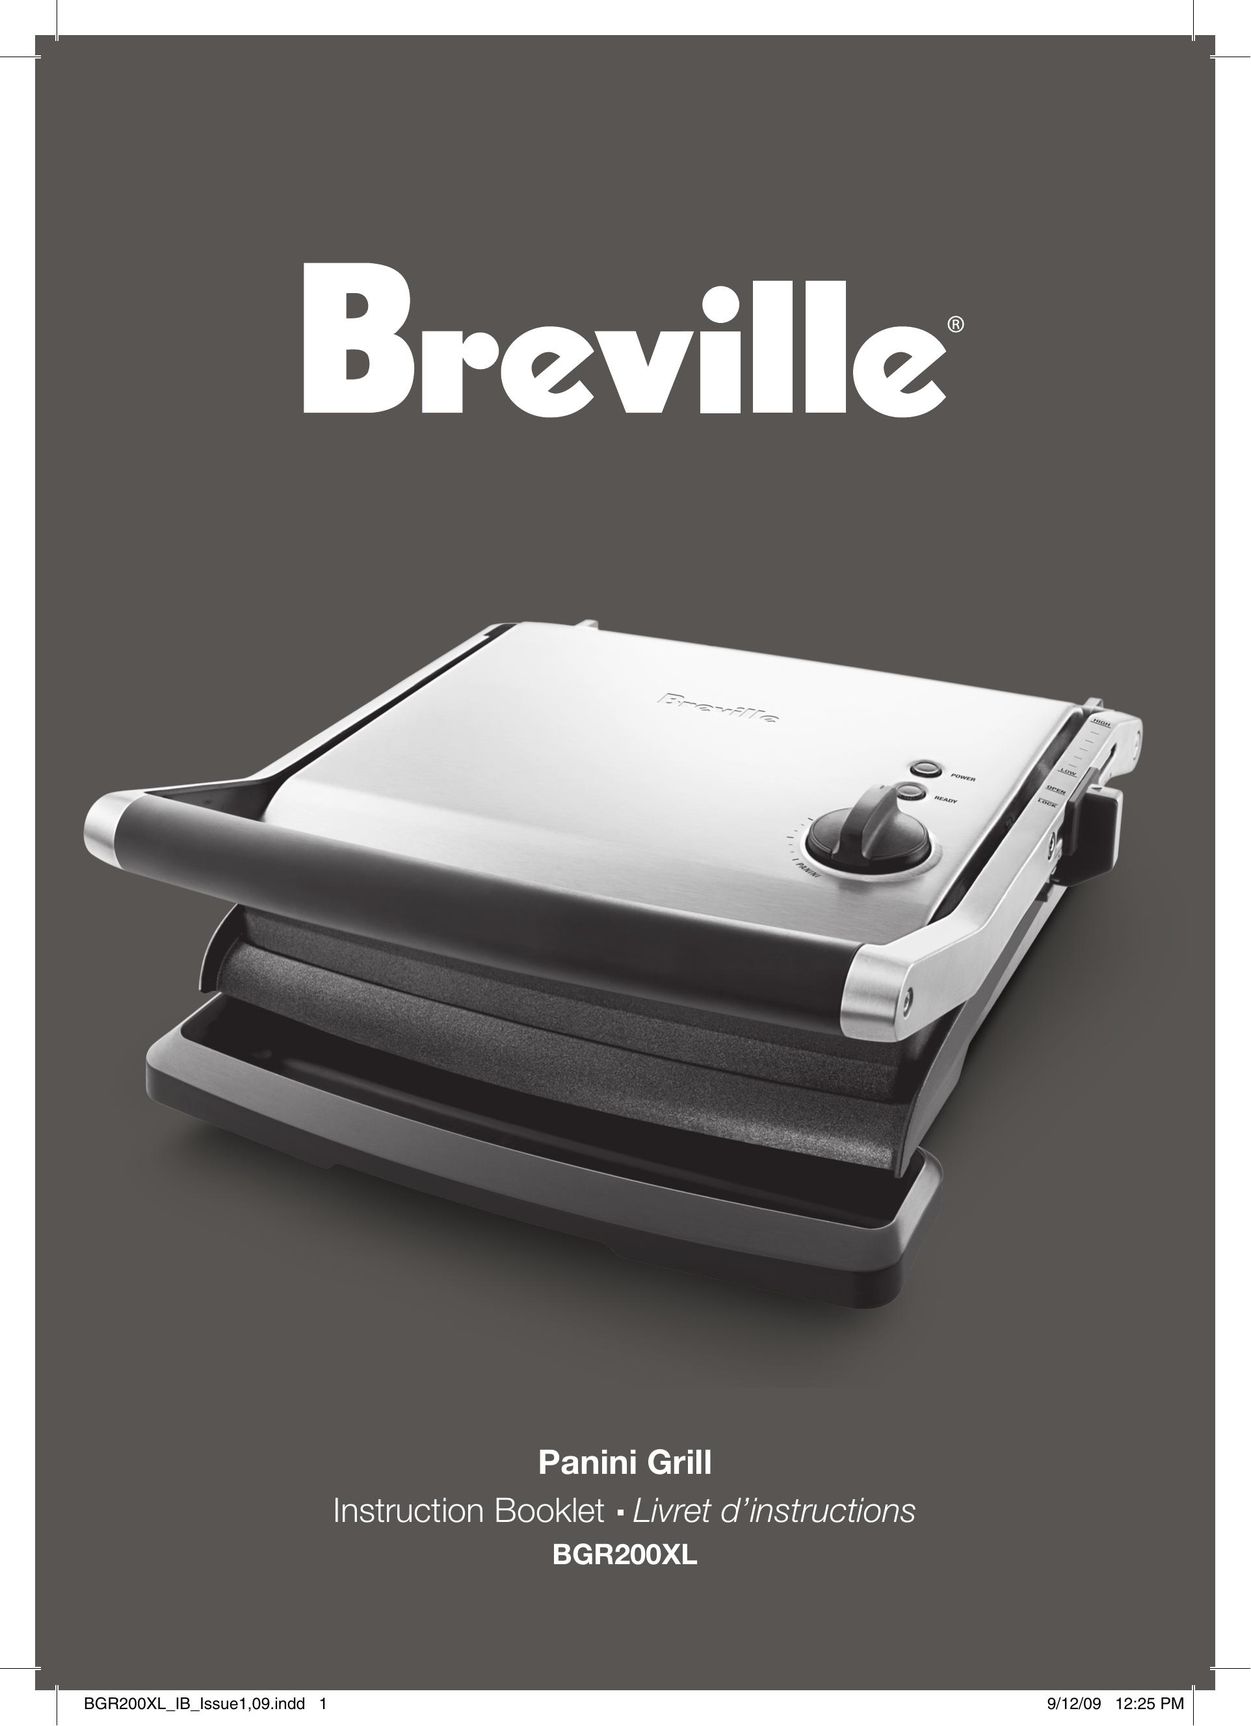 Breville BGR200XL Kitchen Grill User Manual